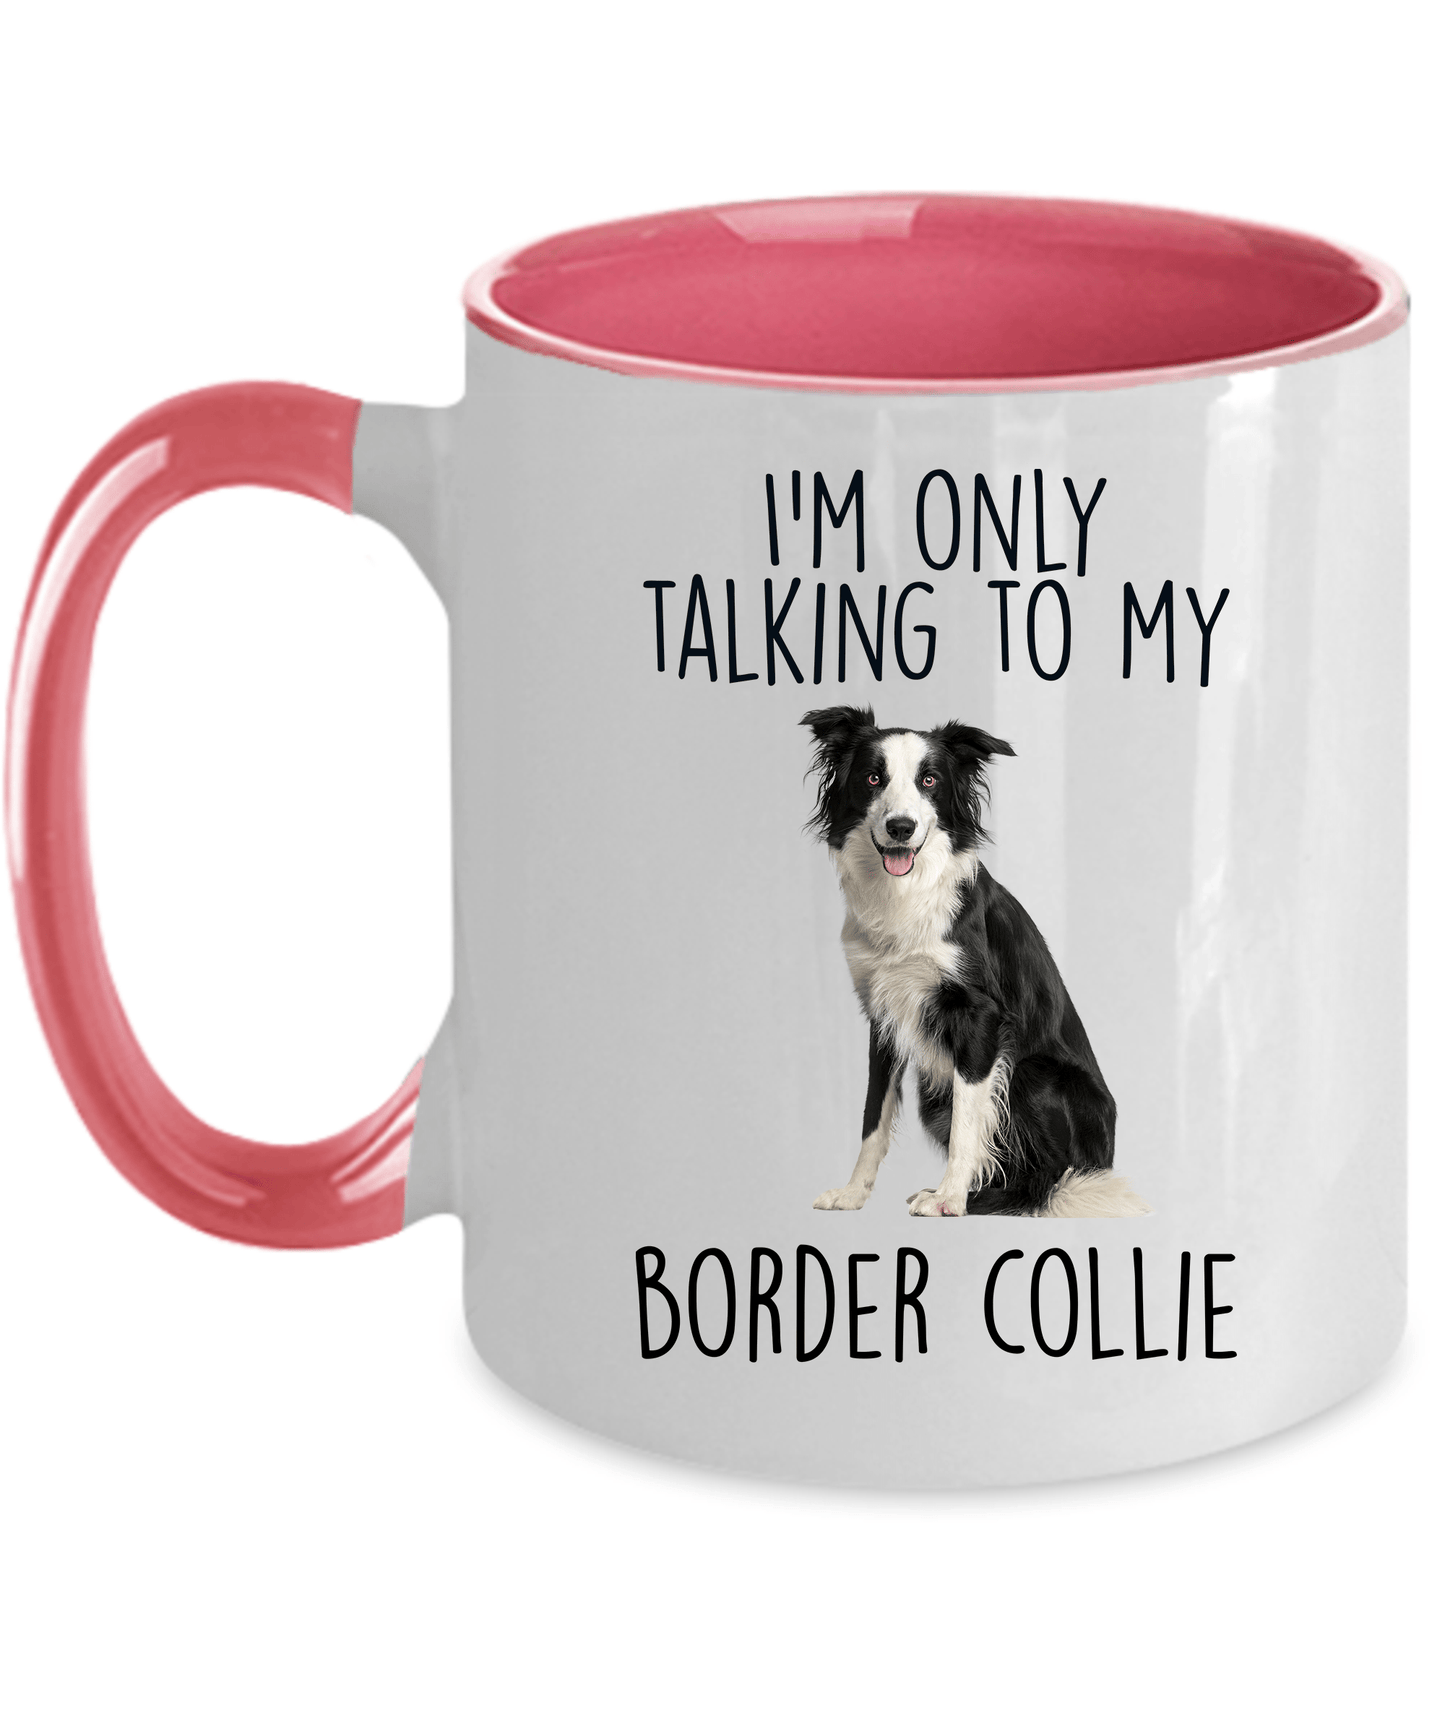 Border Collie Ceramic Coffee Mug I'm only talking to my dog